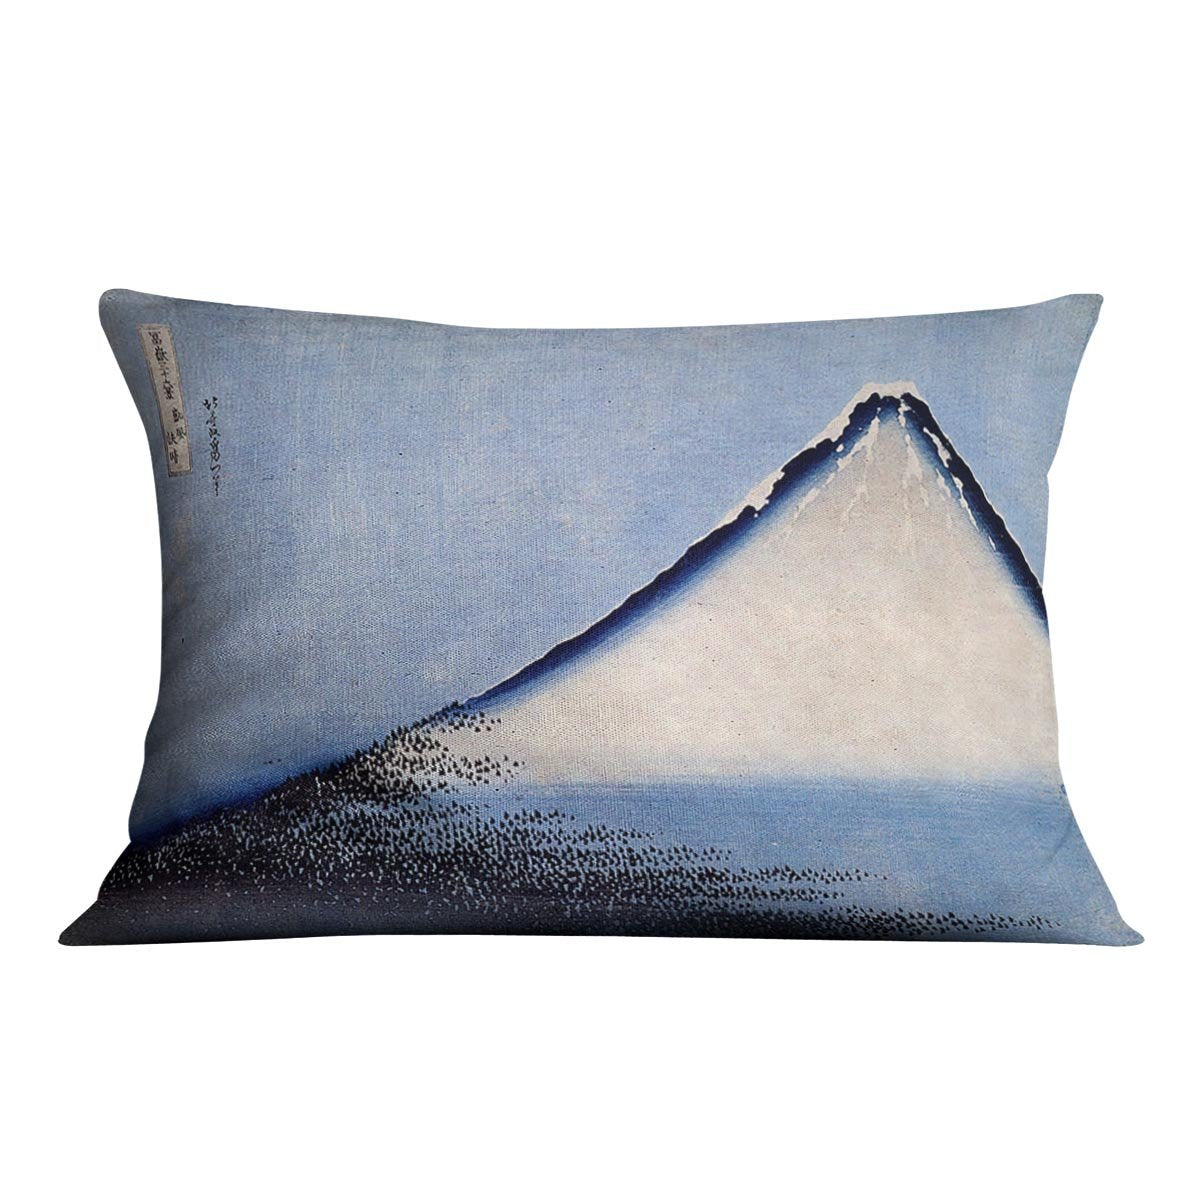 Mount Fuji 2 by Hokusai Throw Pillow